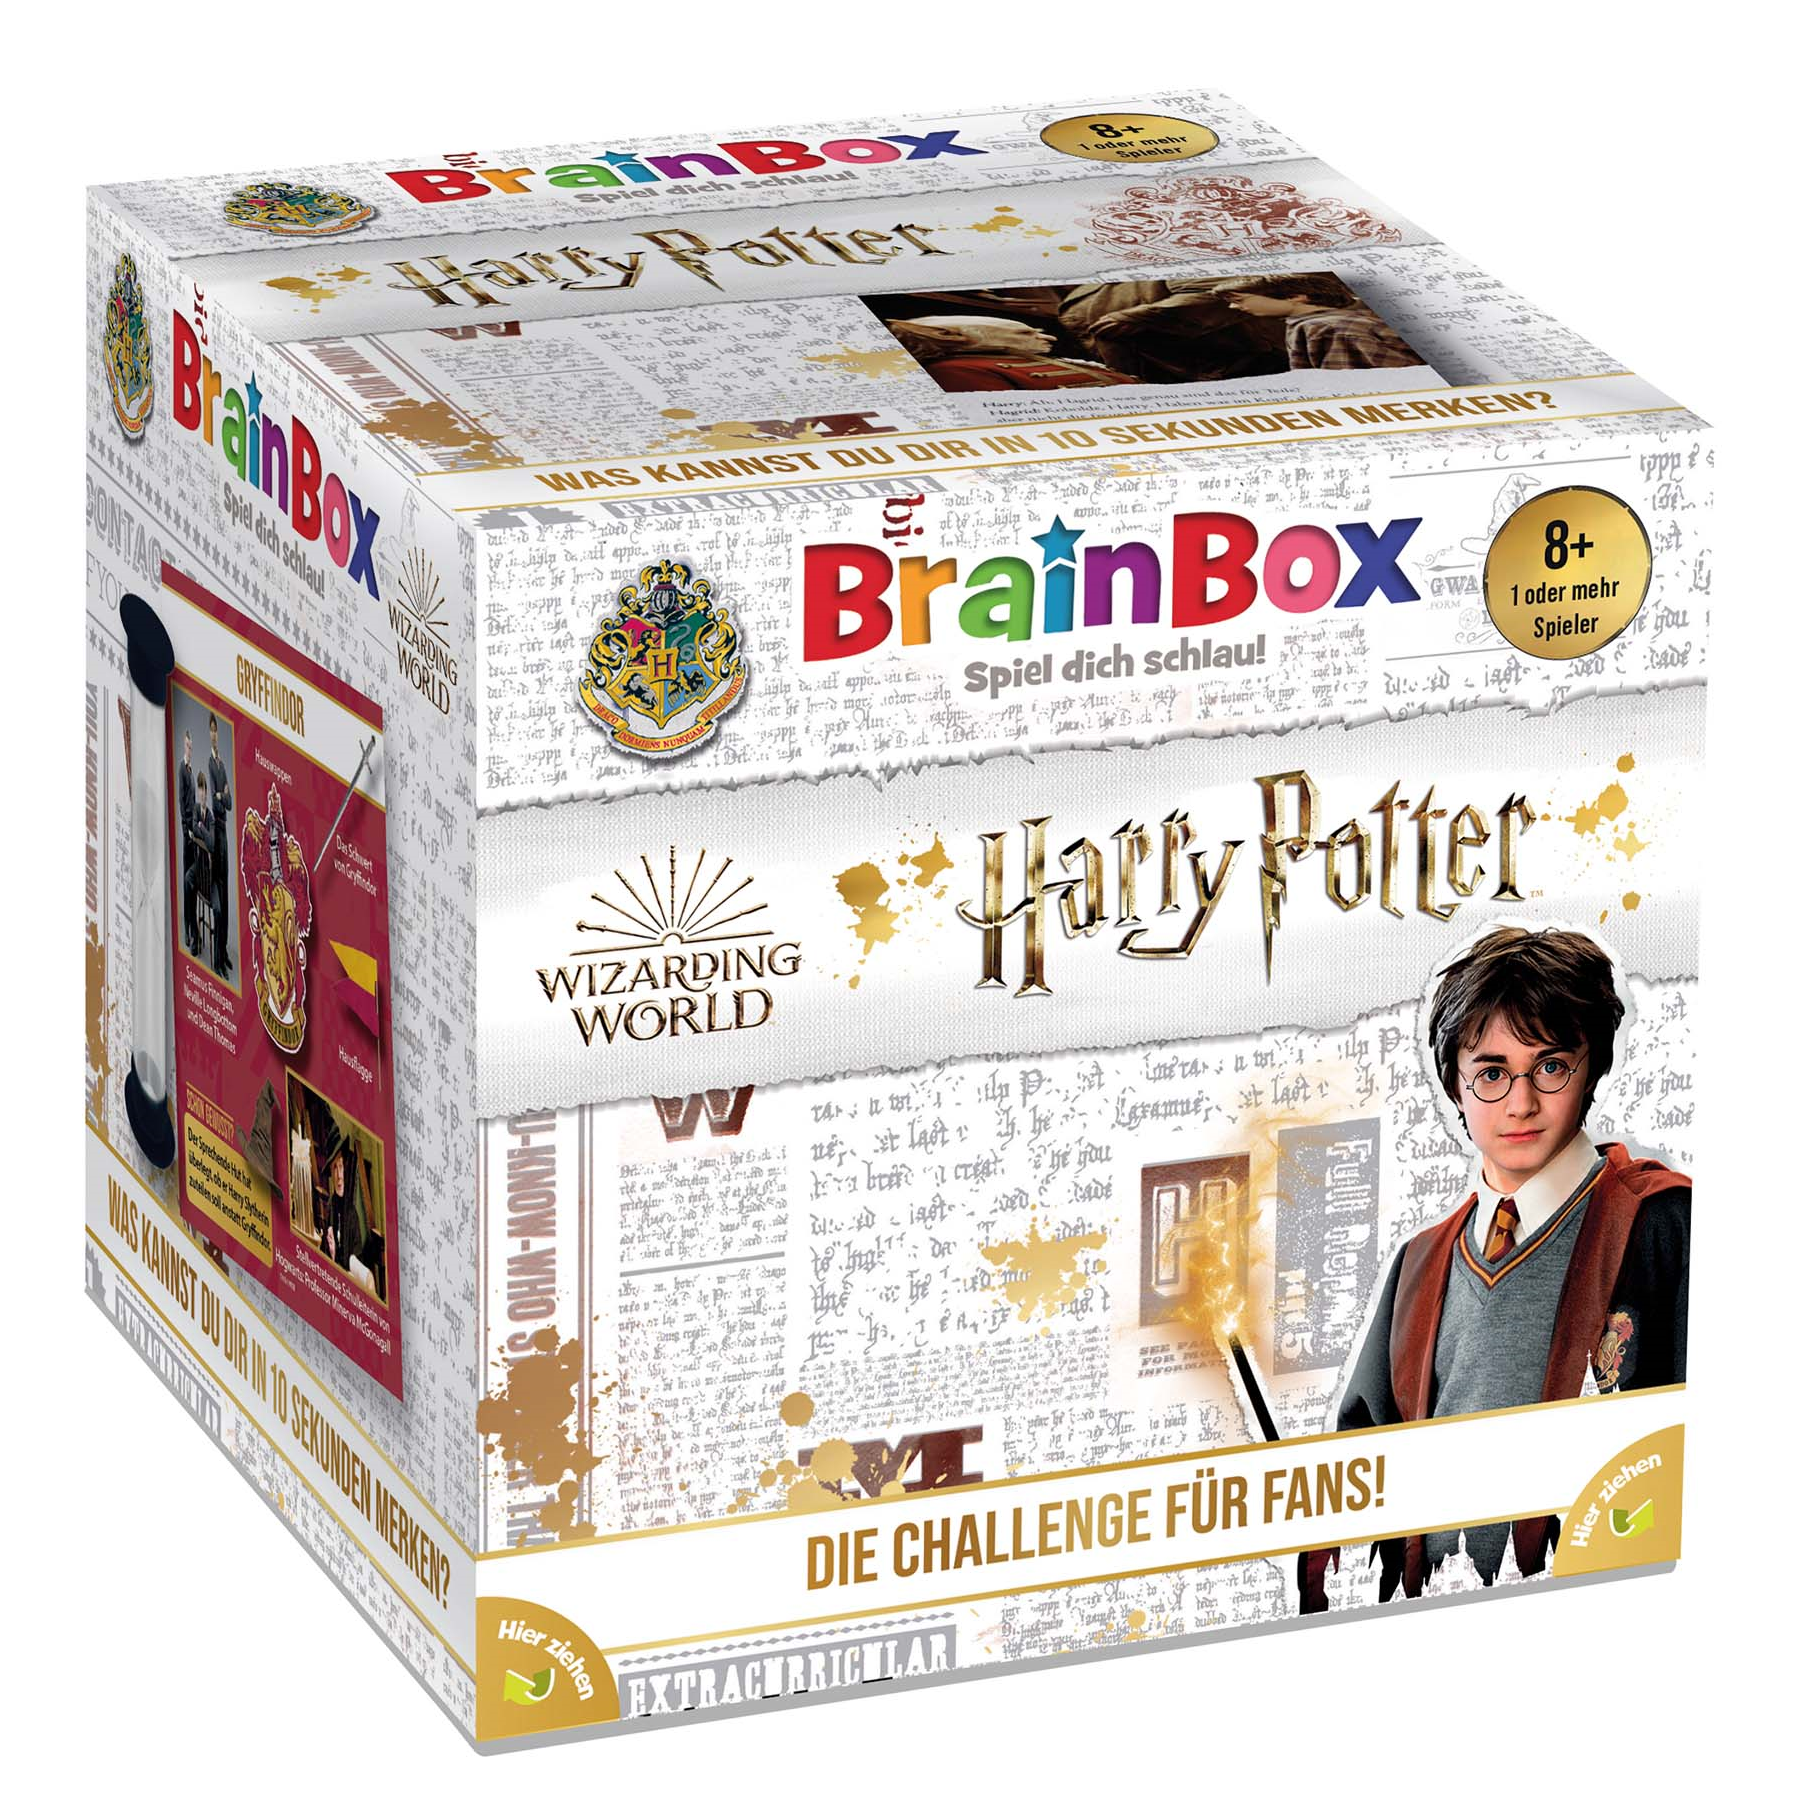 BrainBox Highlight für Harry Potter Fans